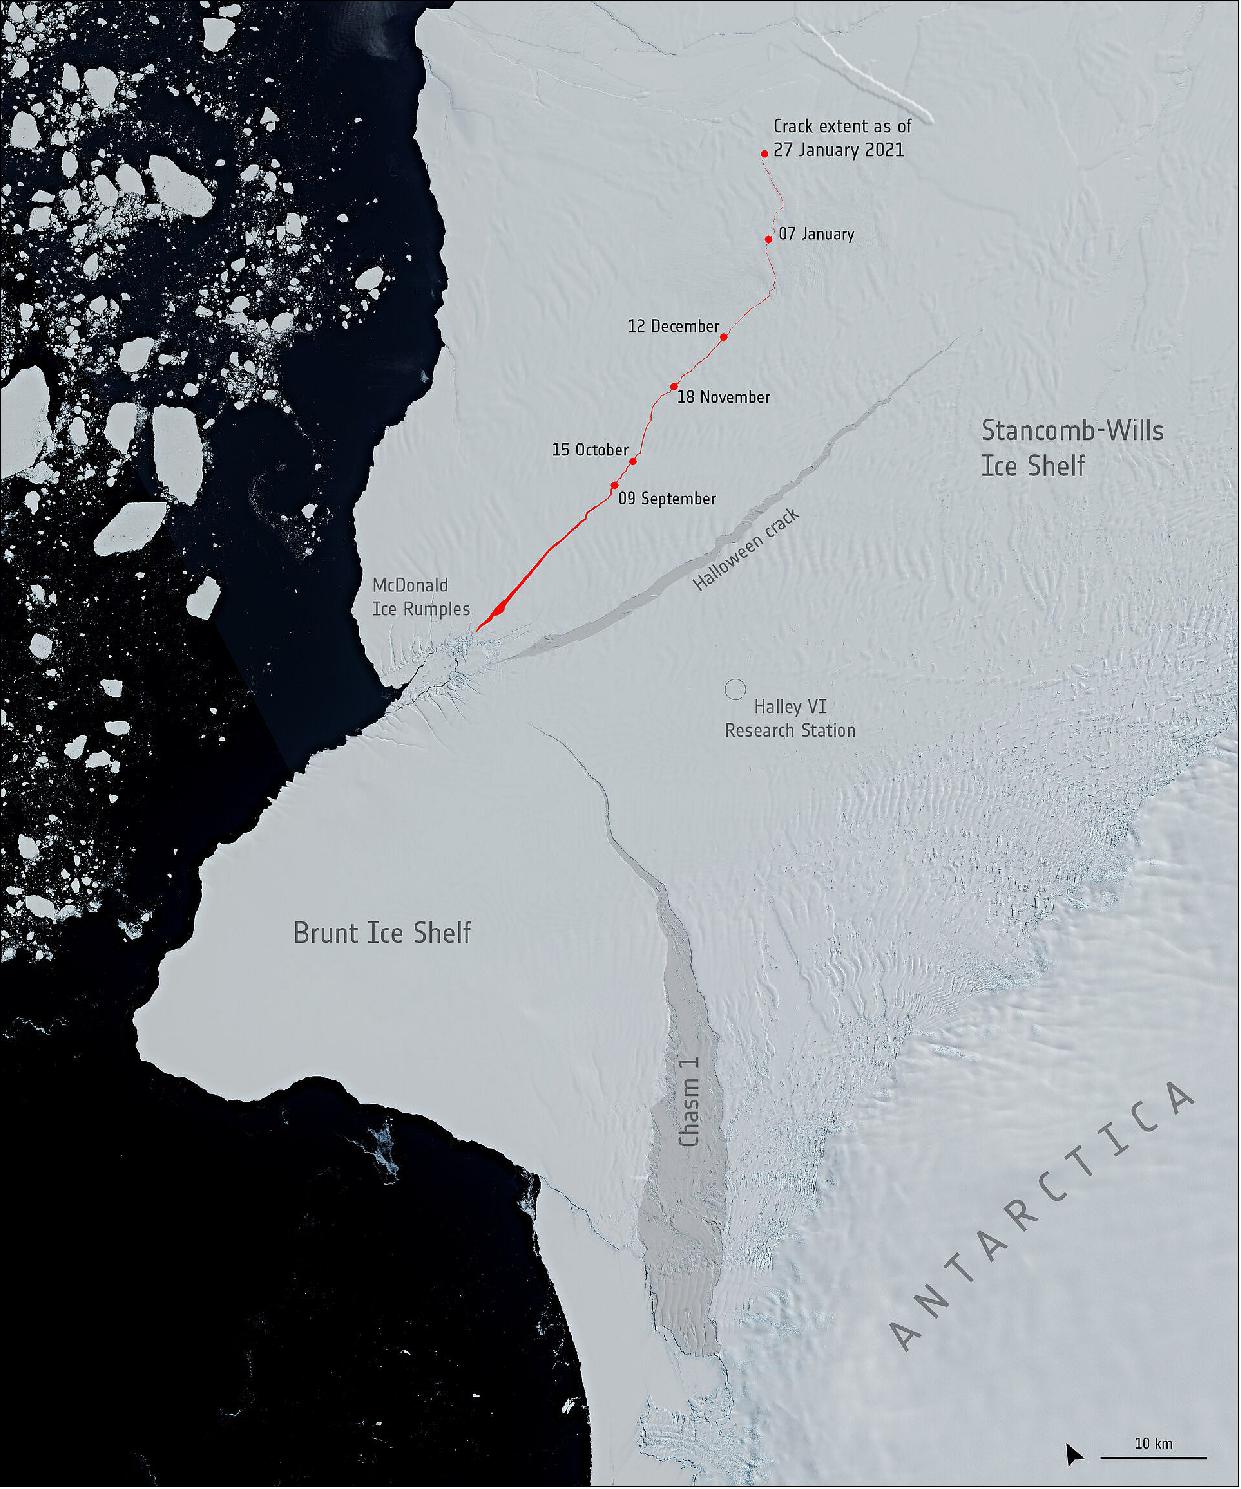 crack in ice shelf north of the McDonald Ice Rumples